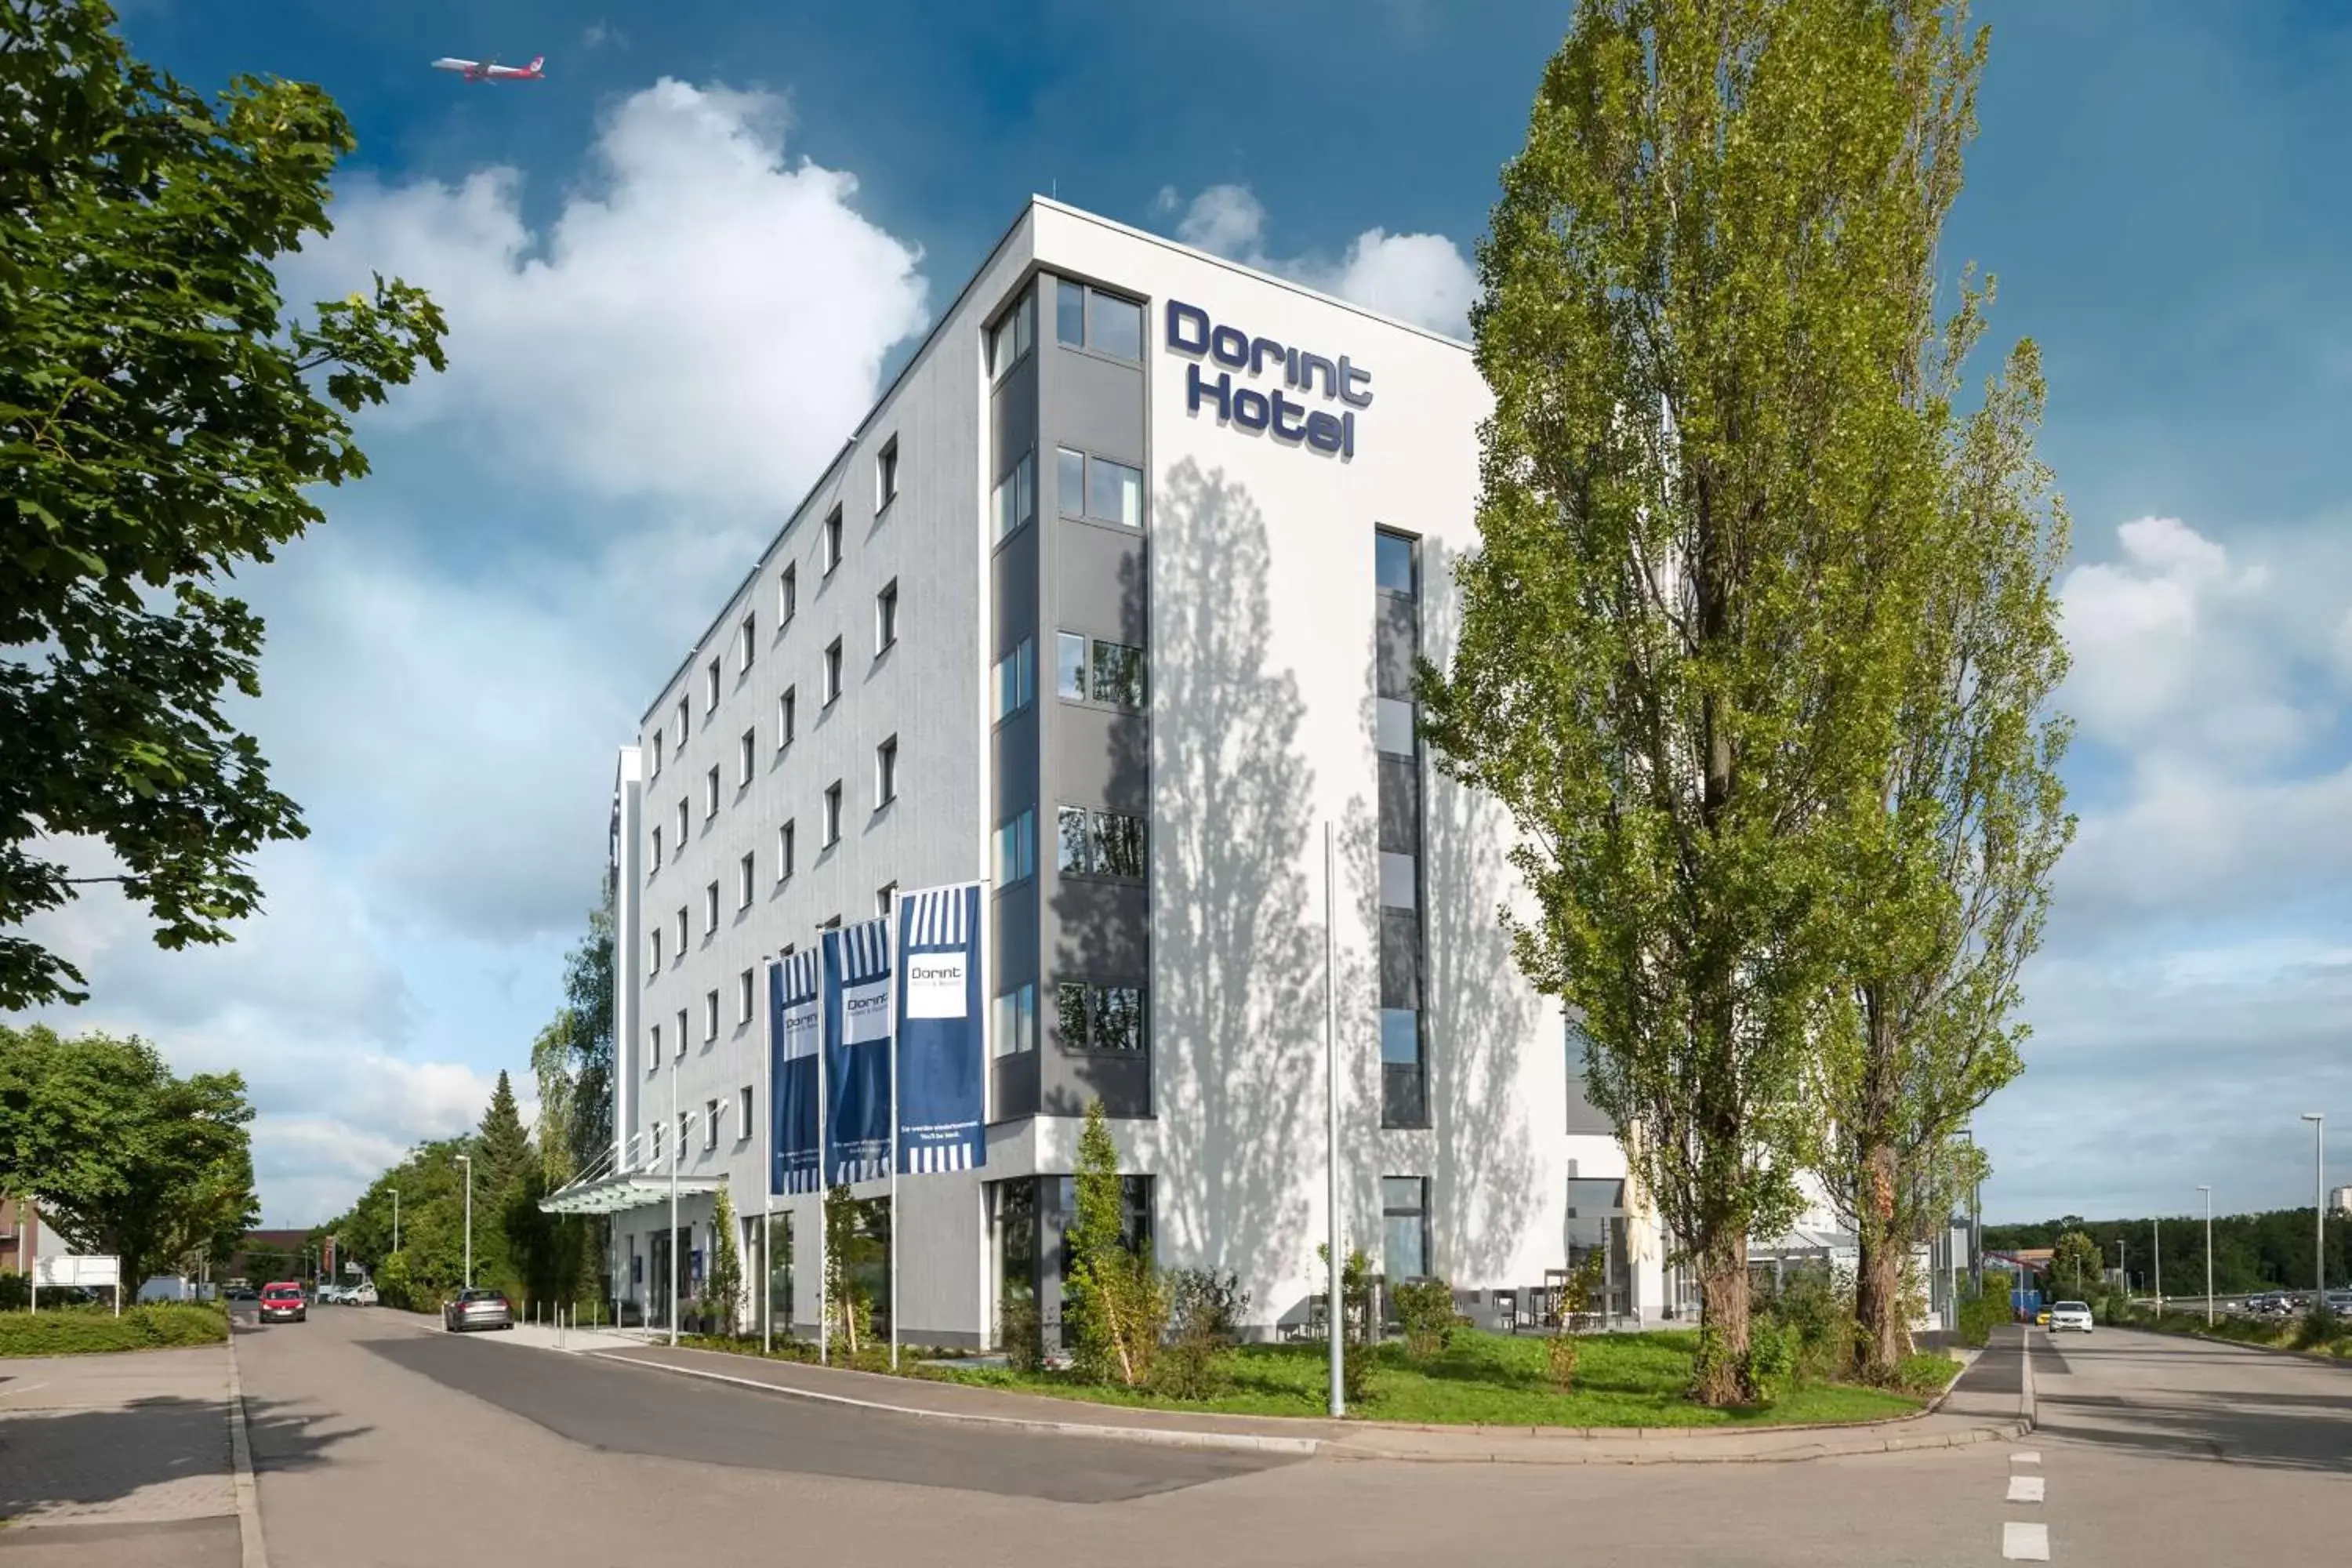 Property Building in Essential by Dorint Stuttgart/Airport